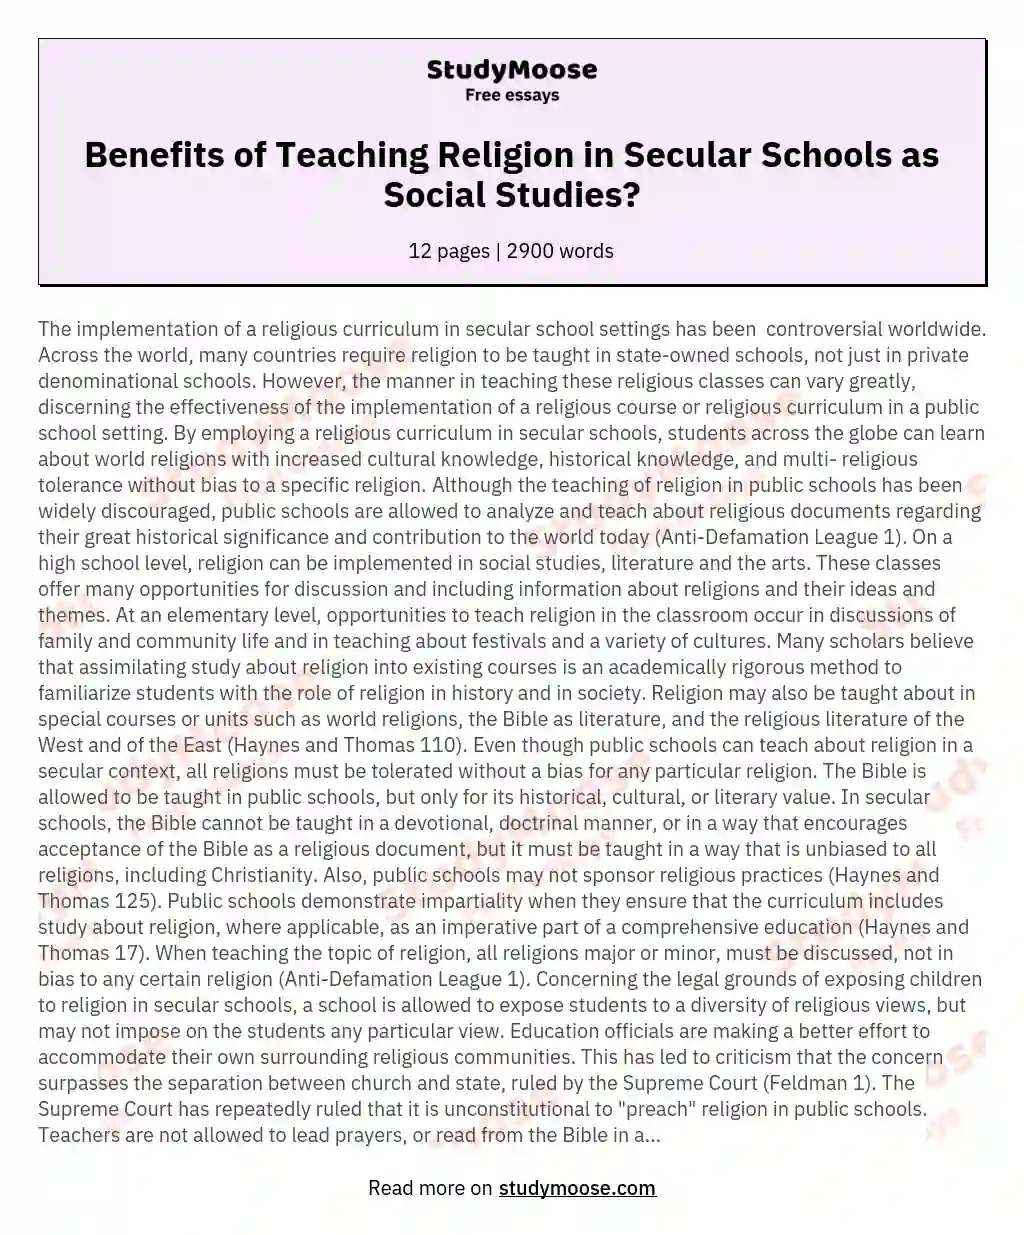 Implementing Religious Curriculum in Public Schools: Controversies and Benefits essay